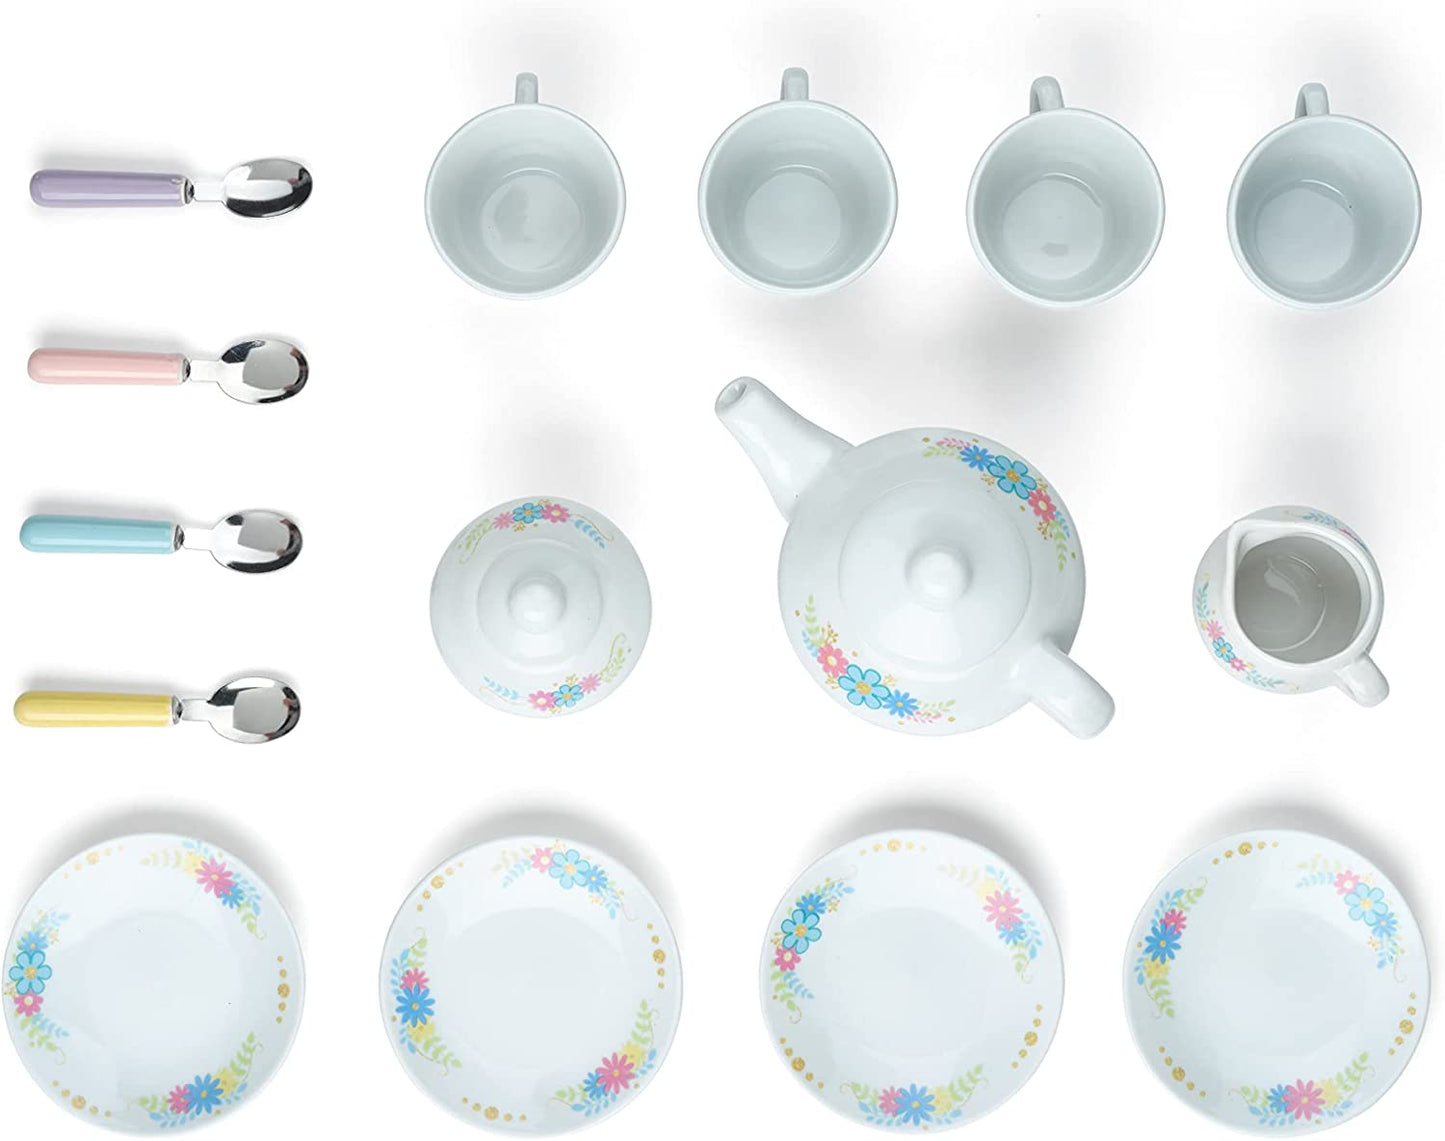 Unicorn Children's Porcelain Tea Set